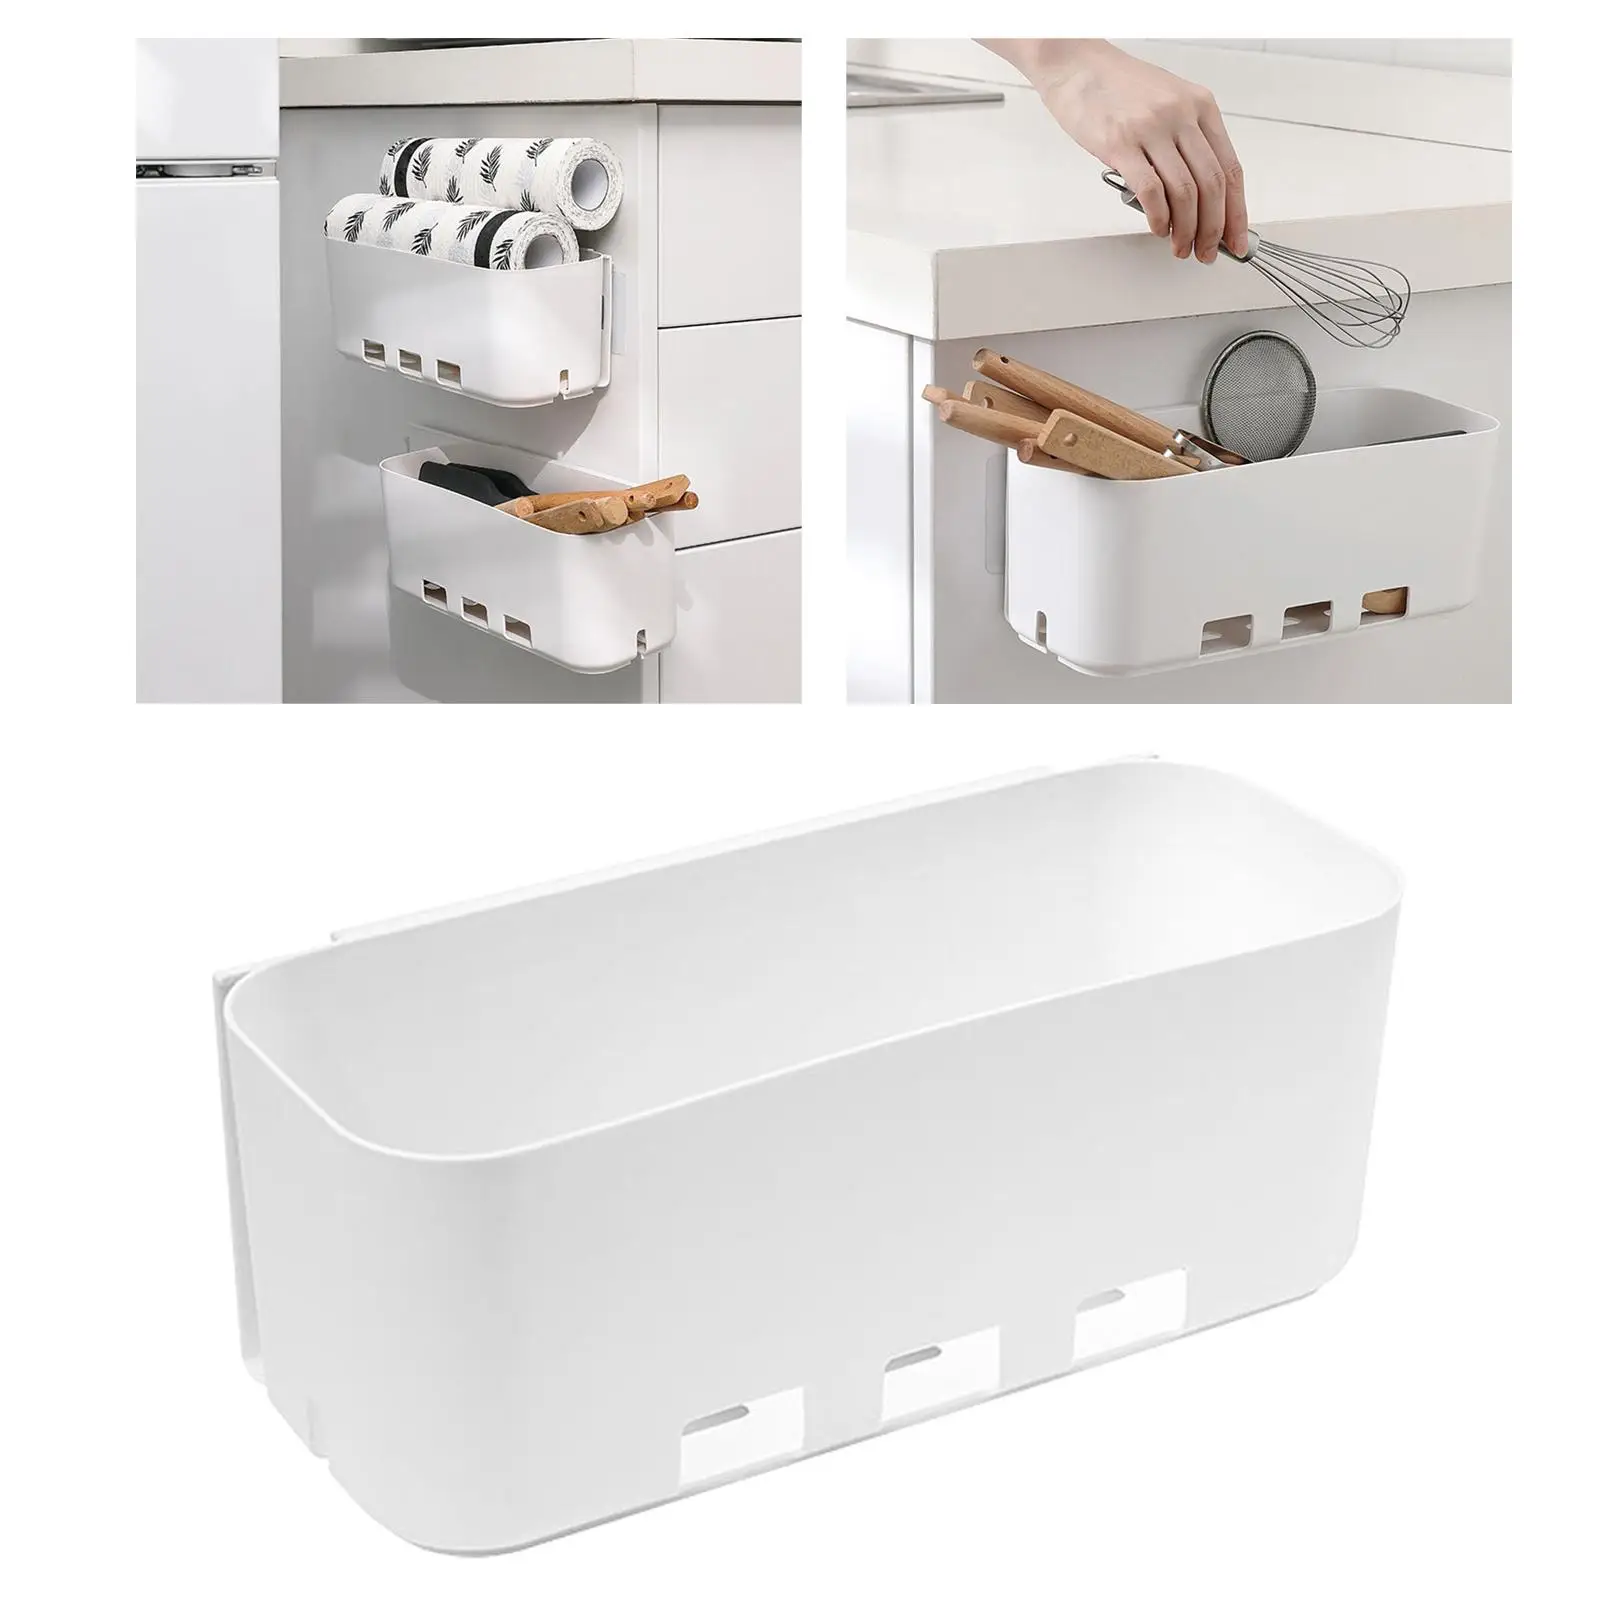 Self Adhesive Sliding Cabinet Basket Shower Organizer Shelf Baskets Organizer with Guide Rail for Pantry Bathroom Laundry Room